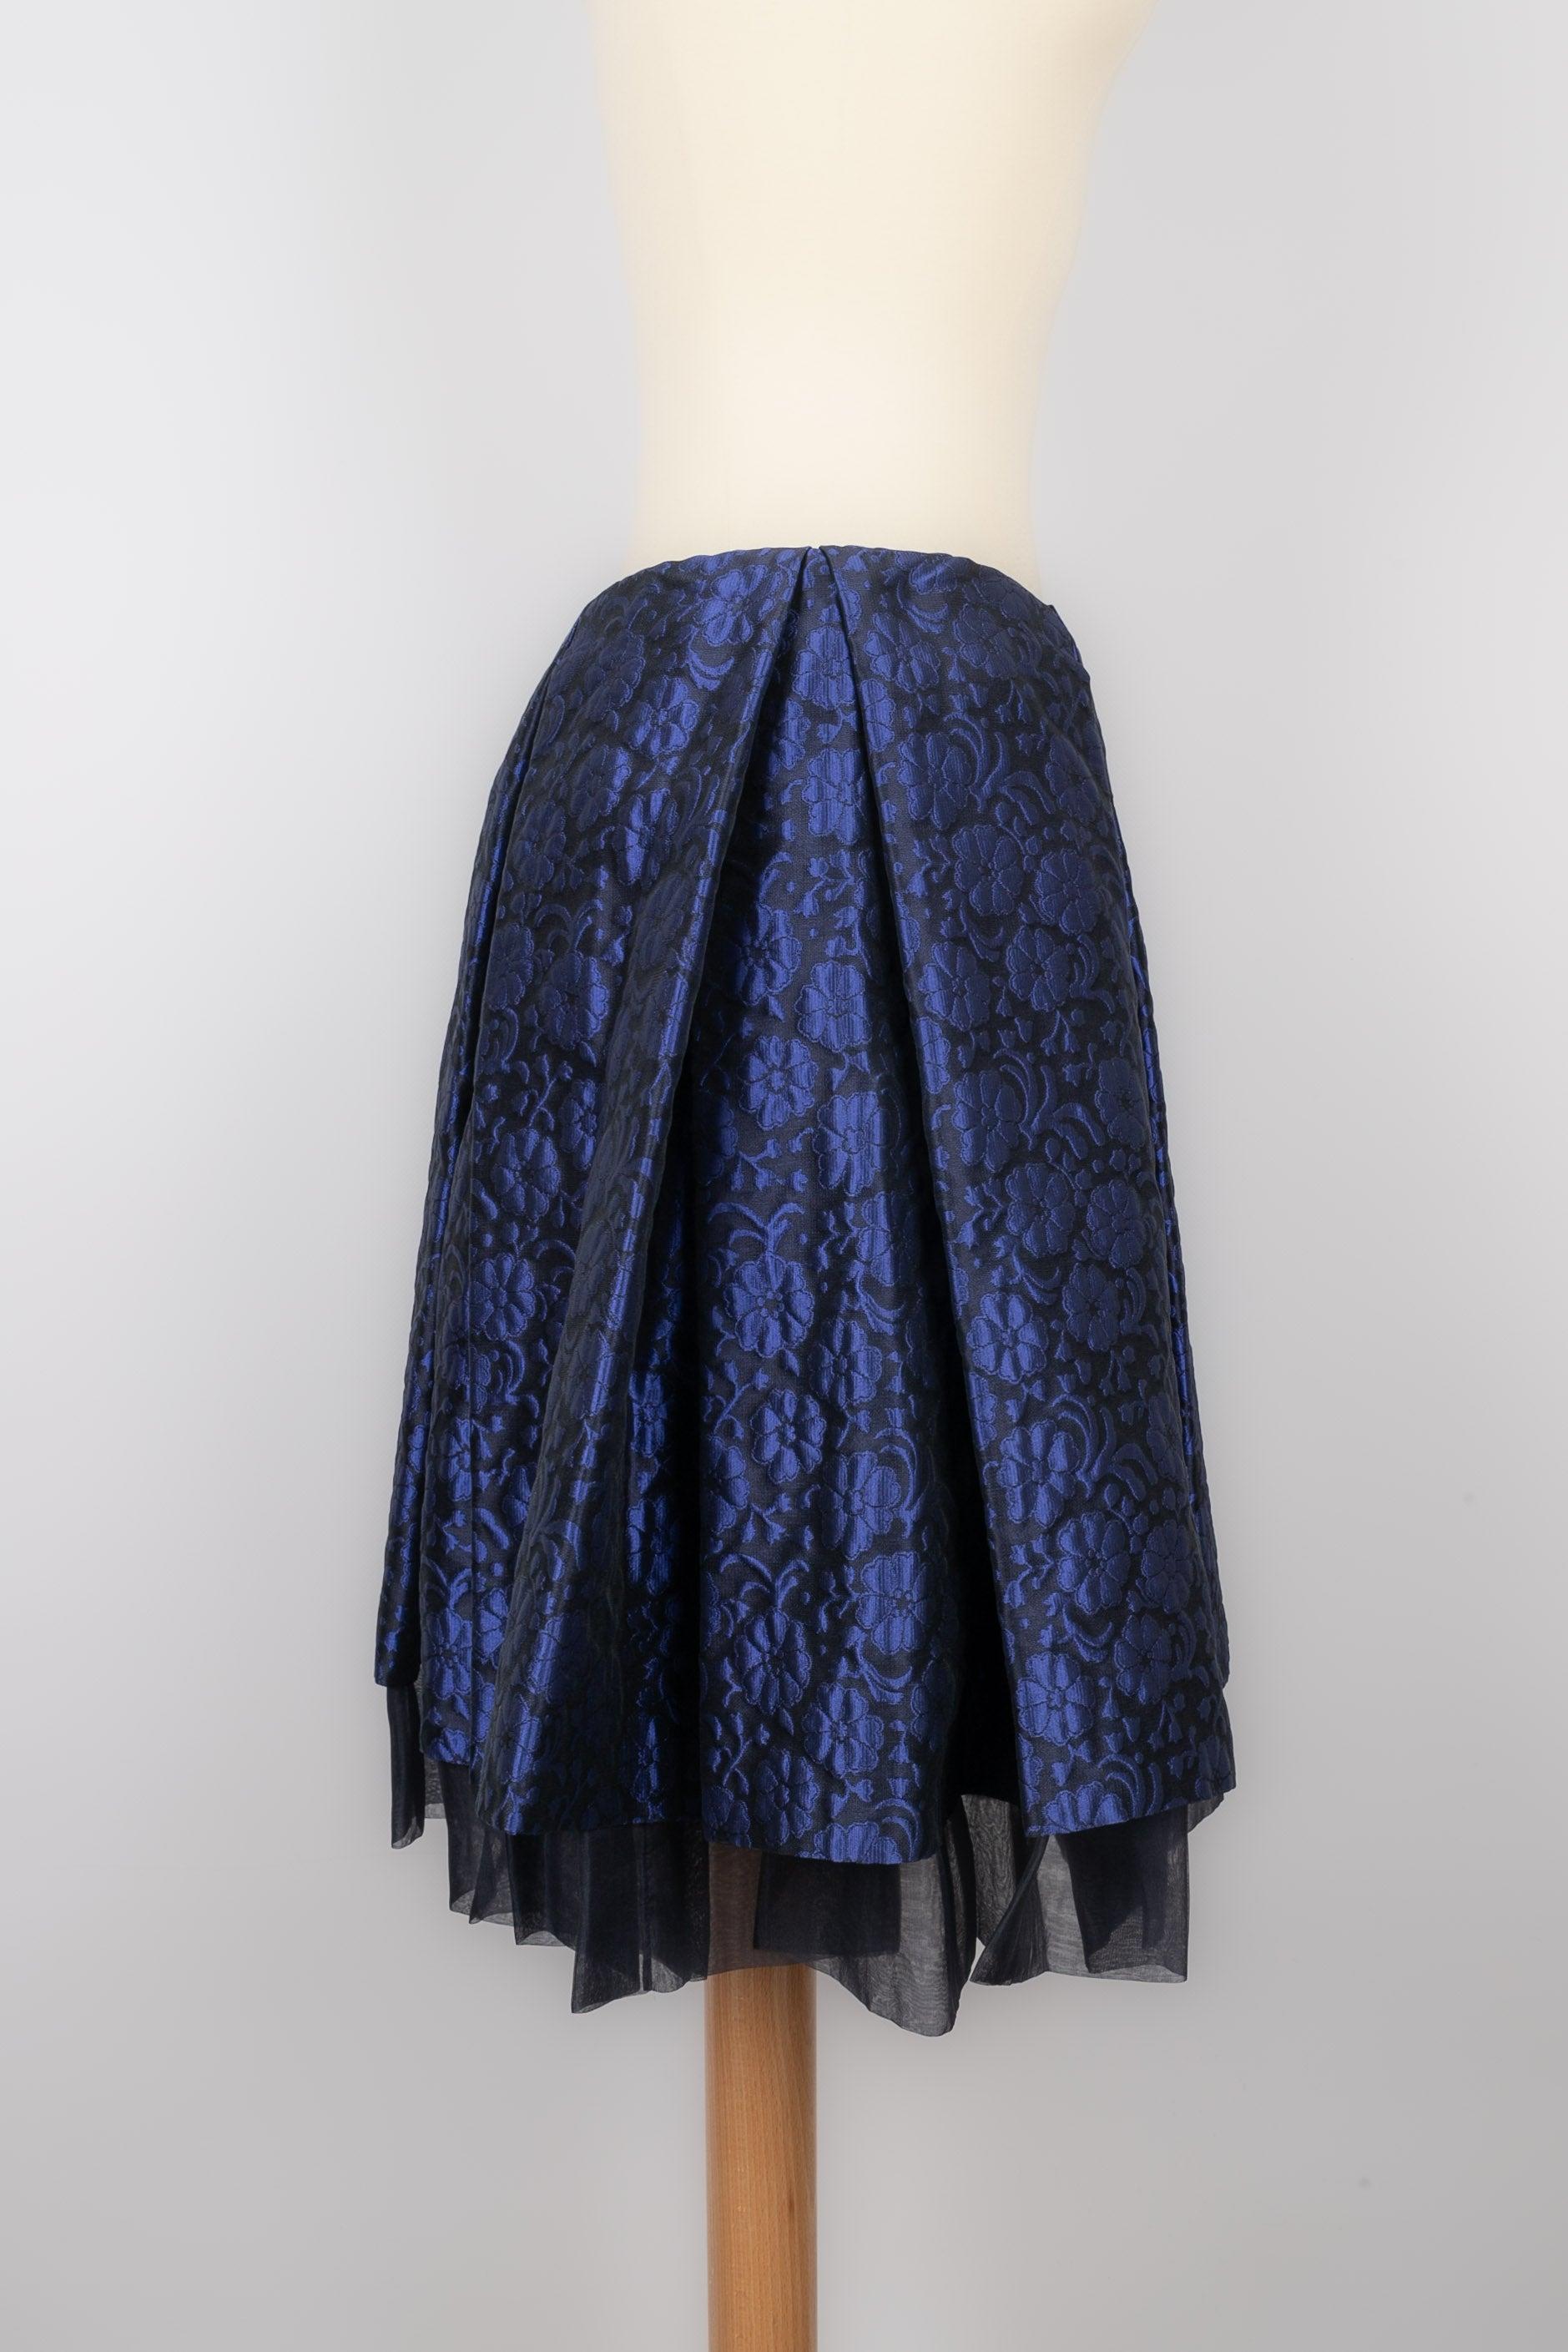 Dior Gauffering Fabric Short Skirt with Silk Lining In Excellent Condition For Sale In SAINT-OUEN-SUR-SEINE, FR